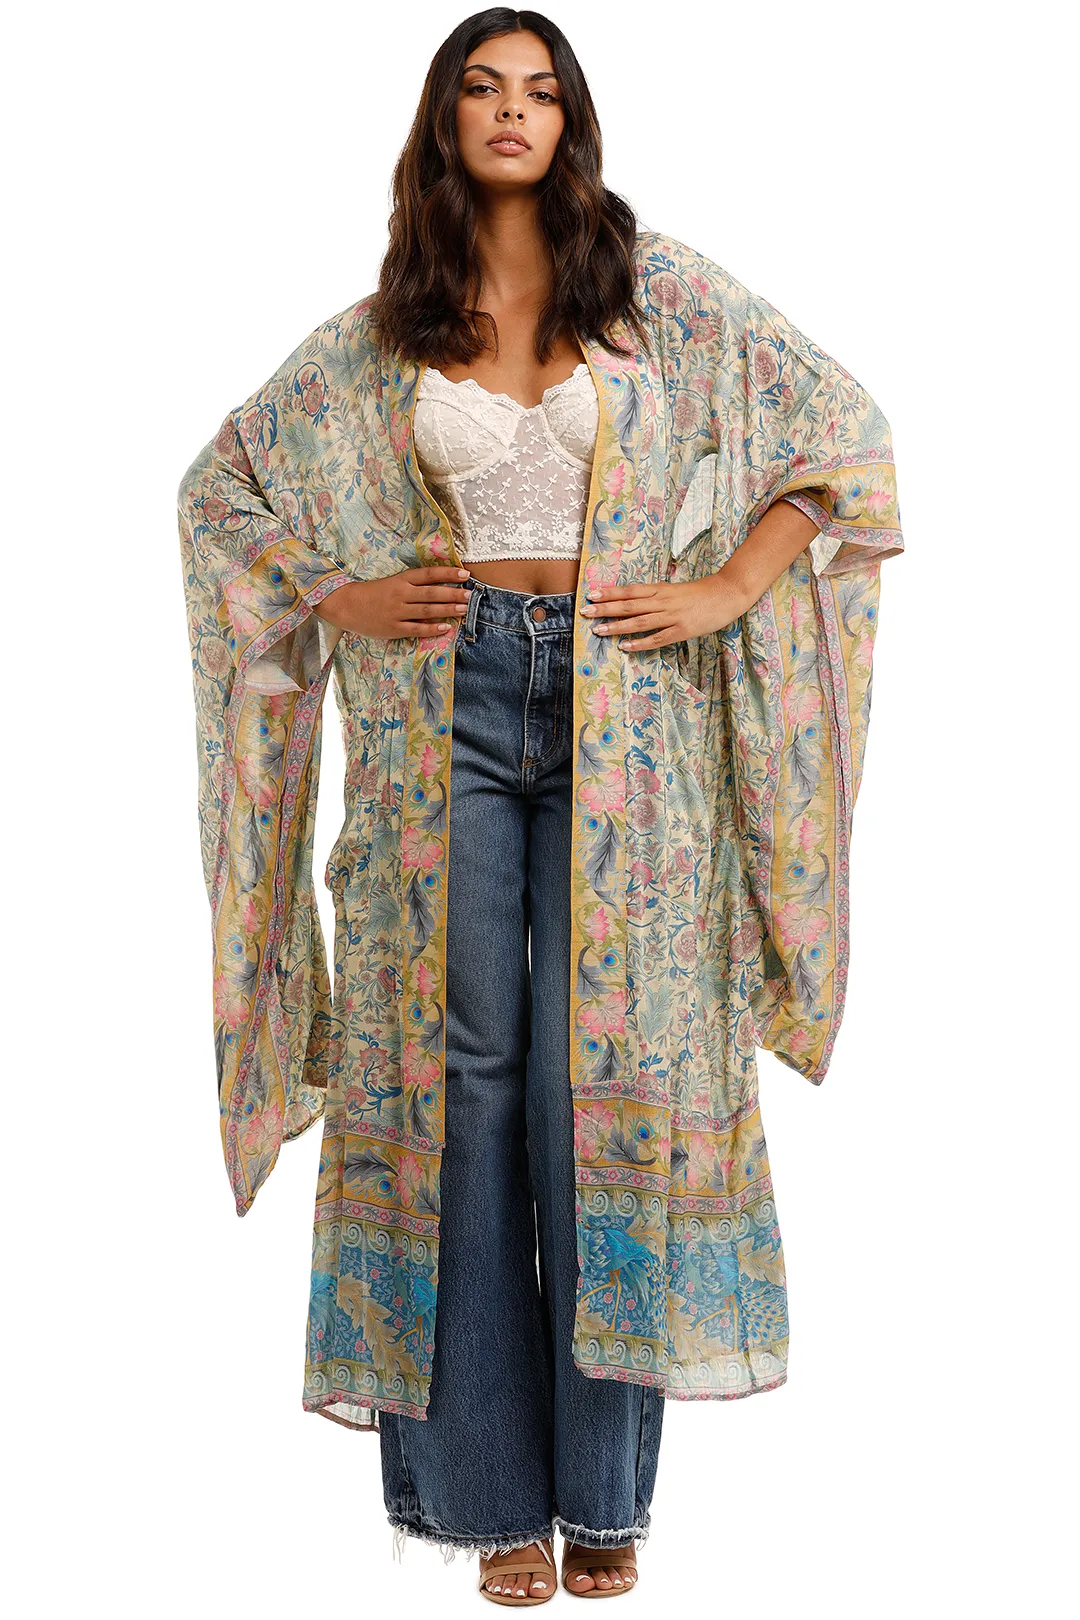 Long Kimono Floral Print Green Color Cotton Viscose Long Length Gown Kimono Duster Robe